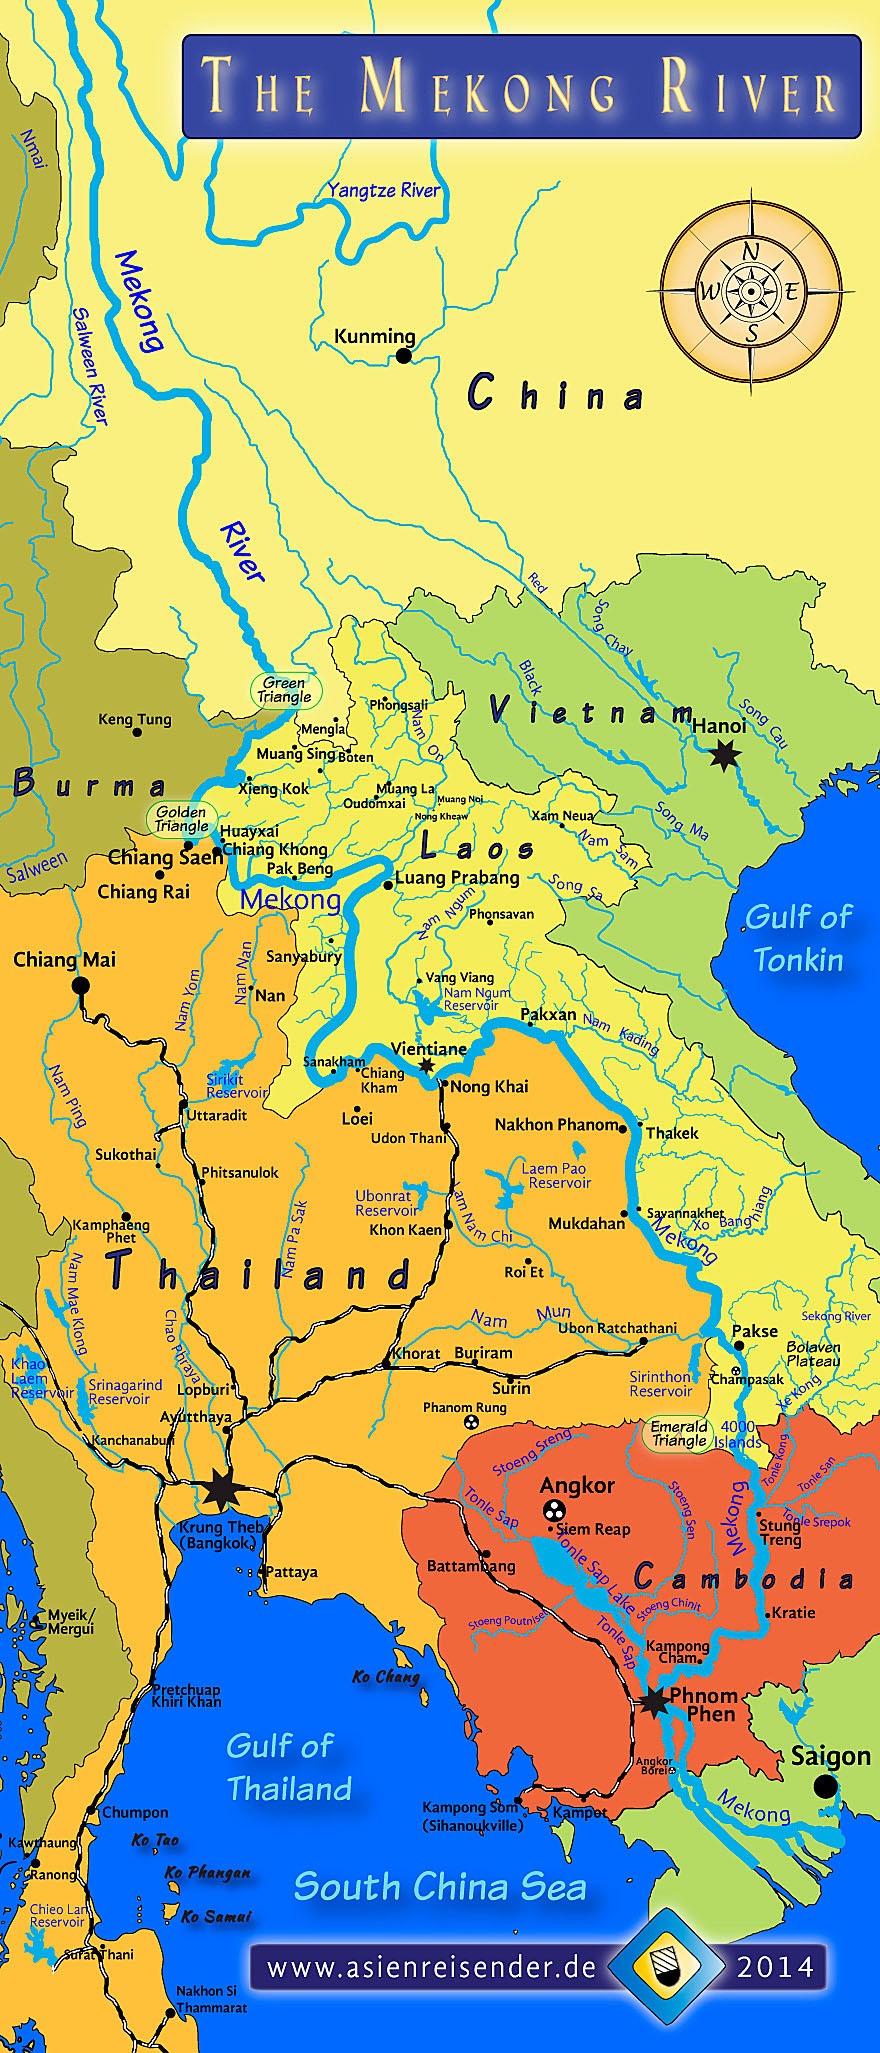 Map of the Mekong River by Asienreisender